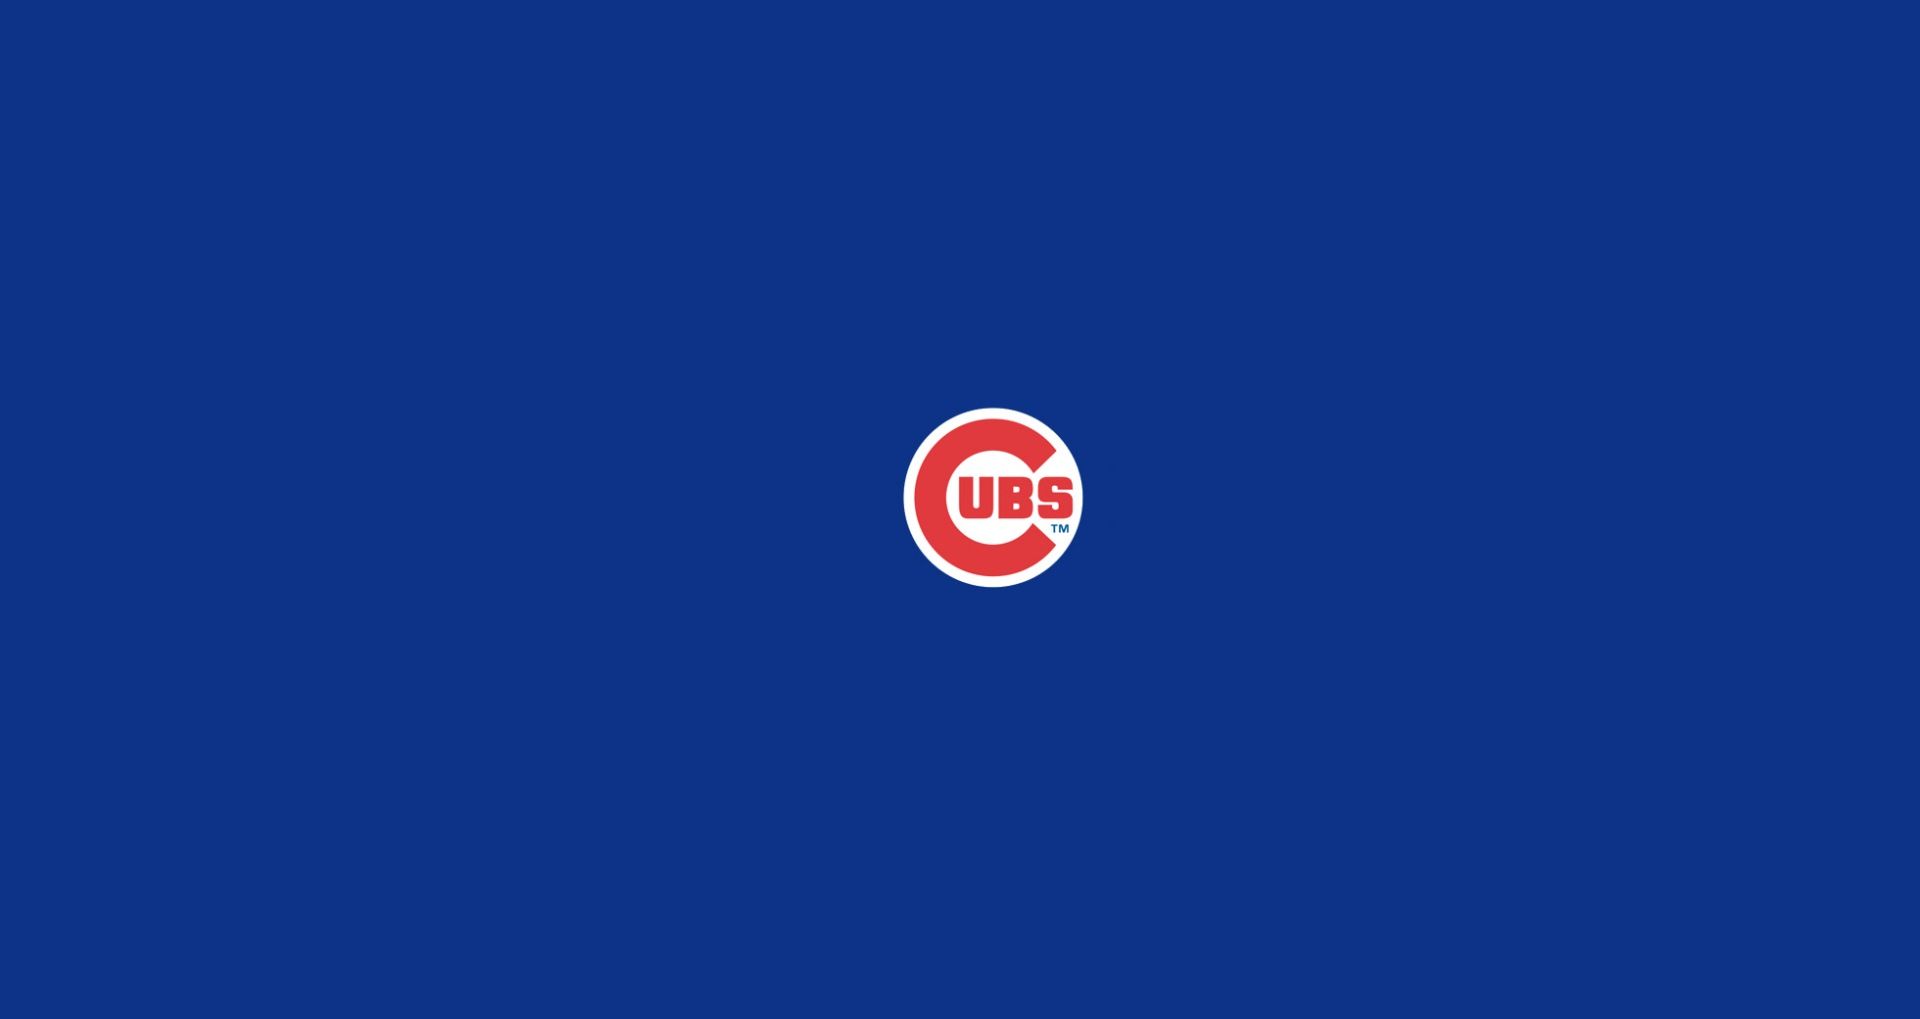 Cool Chicago Cubs Wallpaper 1080p HD